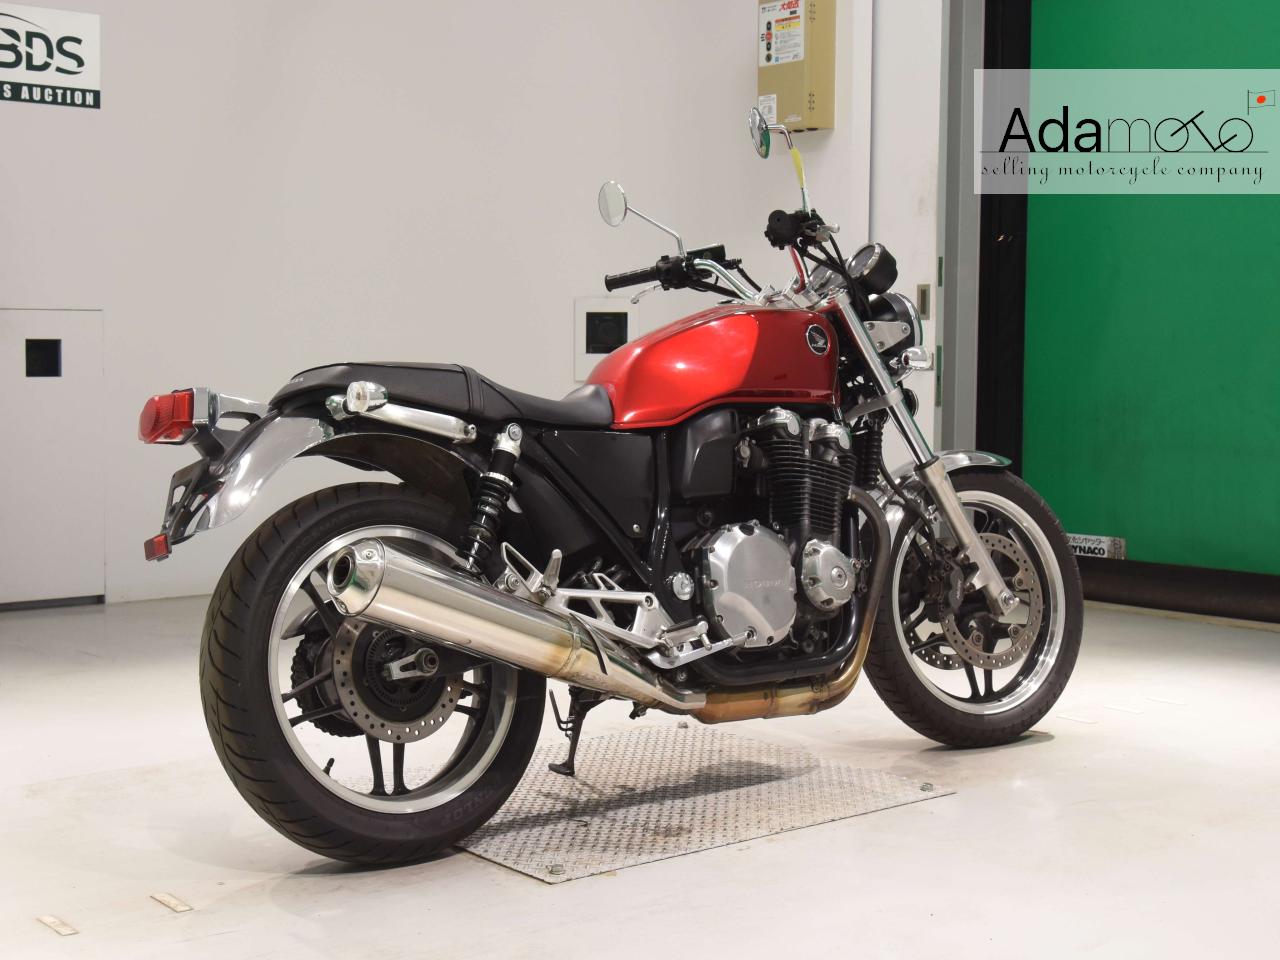 Honda CB1100 - Adamoto - Motorcycles from Japan